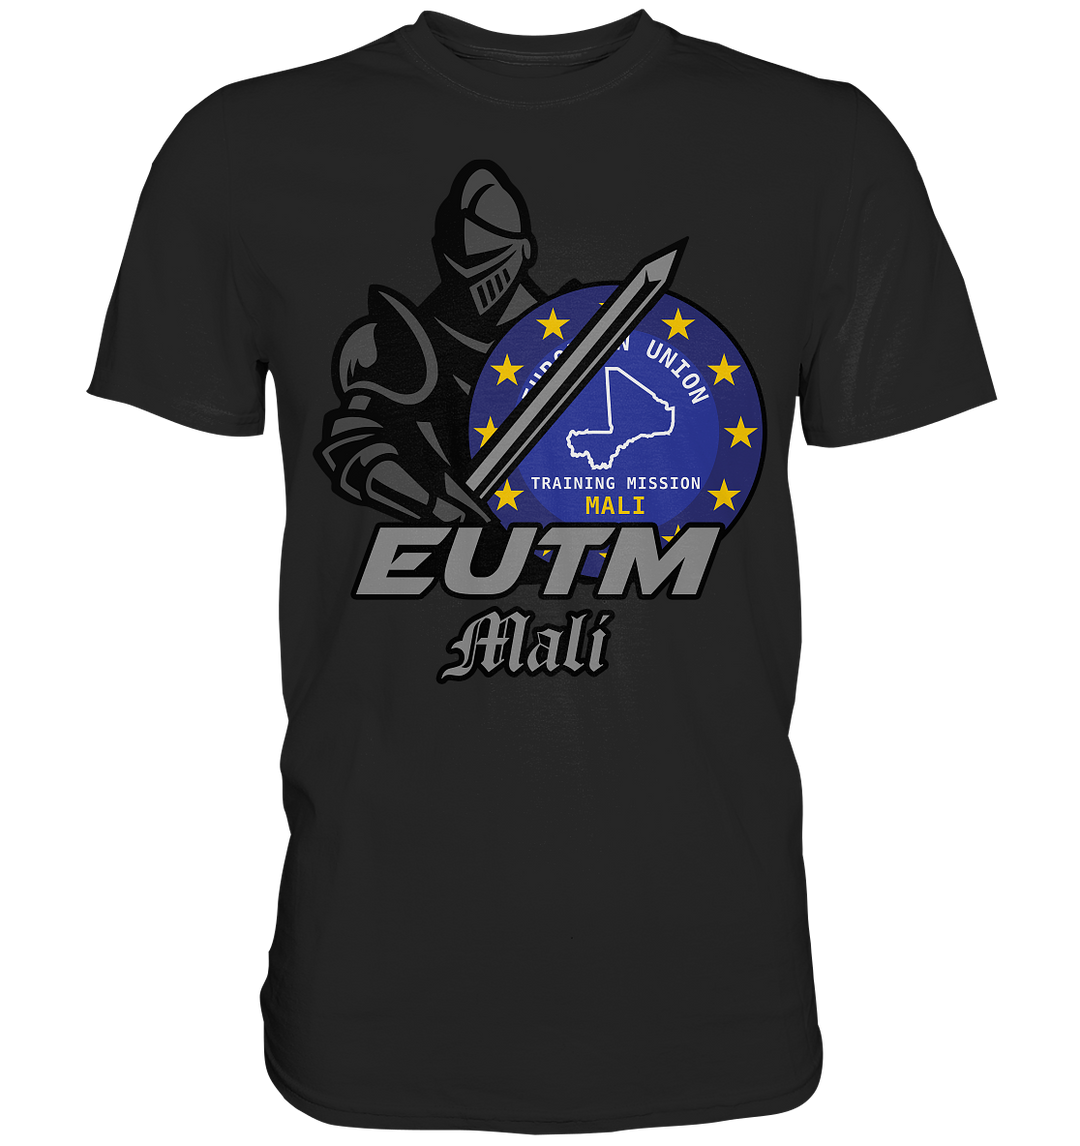 "EUTM Mali - Ritter" - Premium Shirt